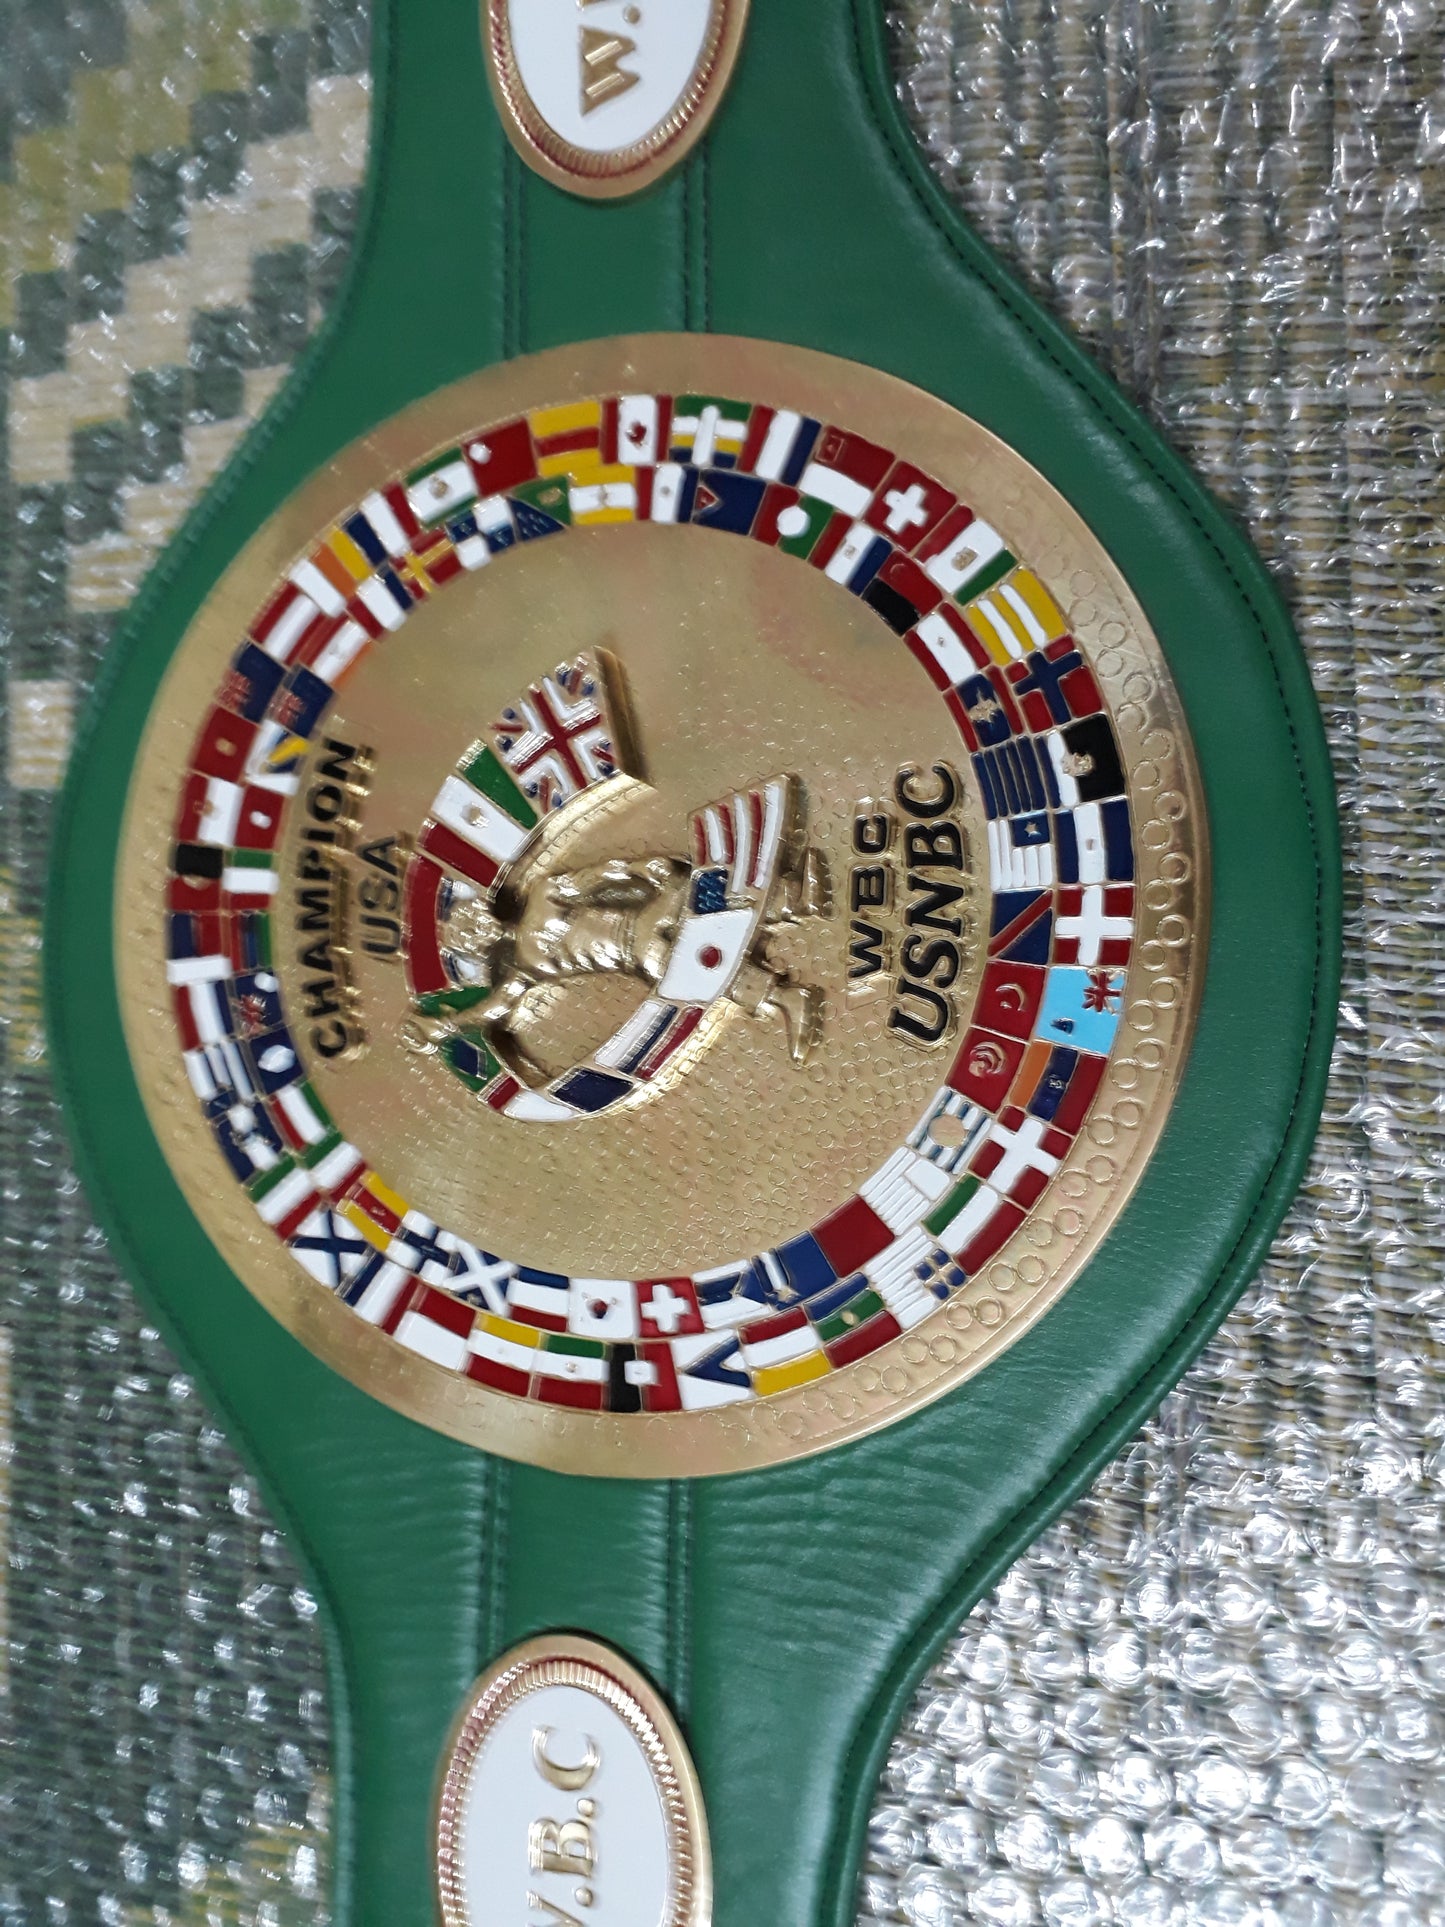 WBC USNBC BOXING CHAMPIONSHIP TITLE BELT